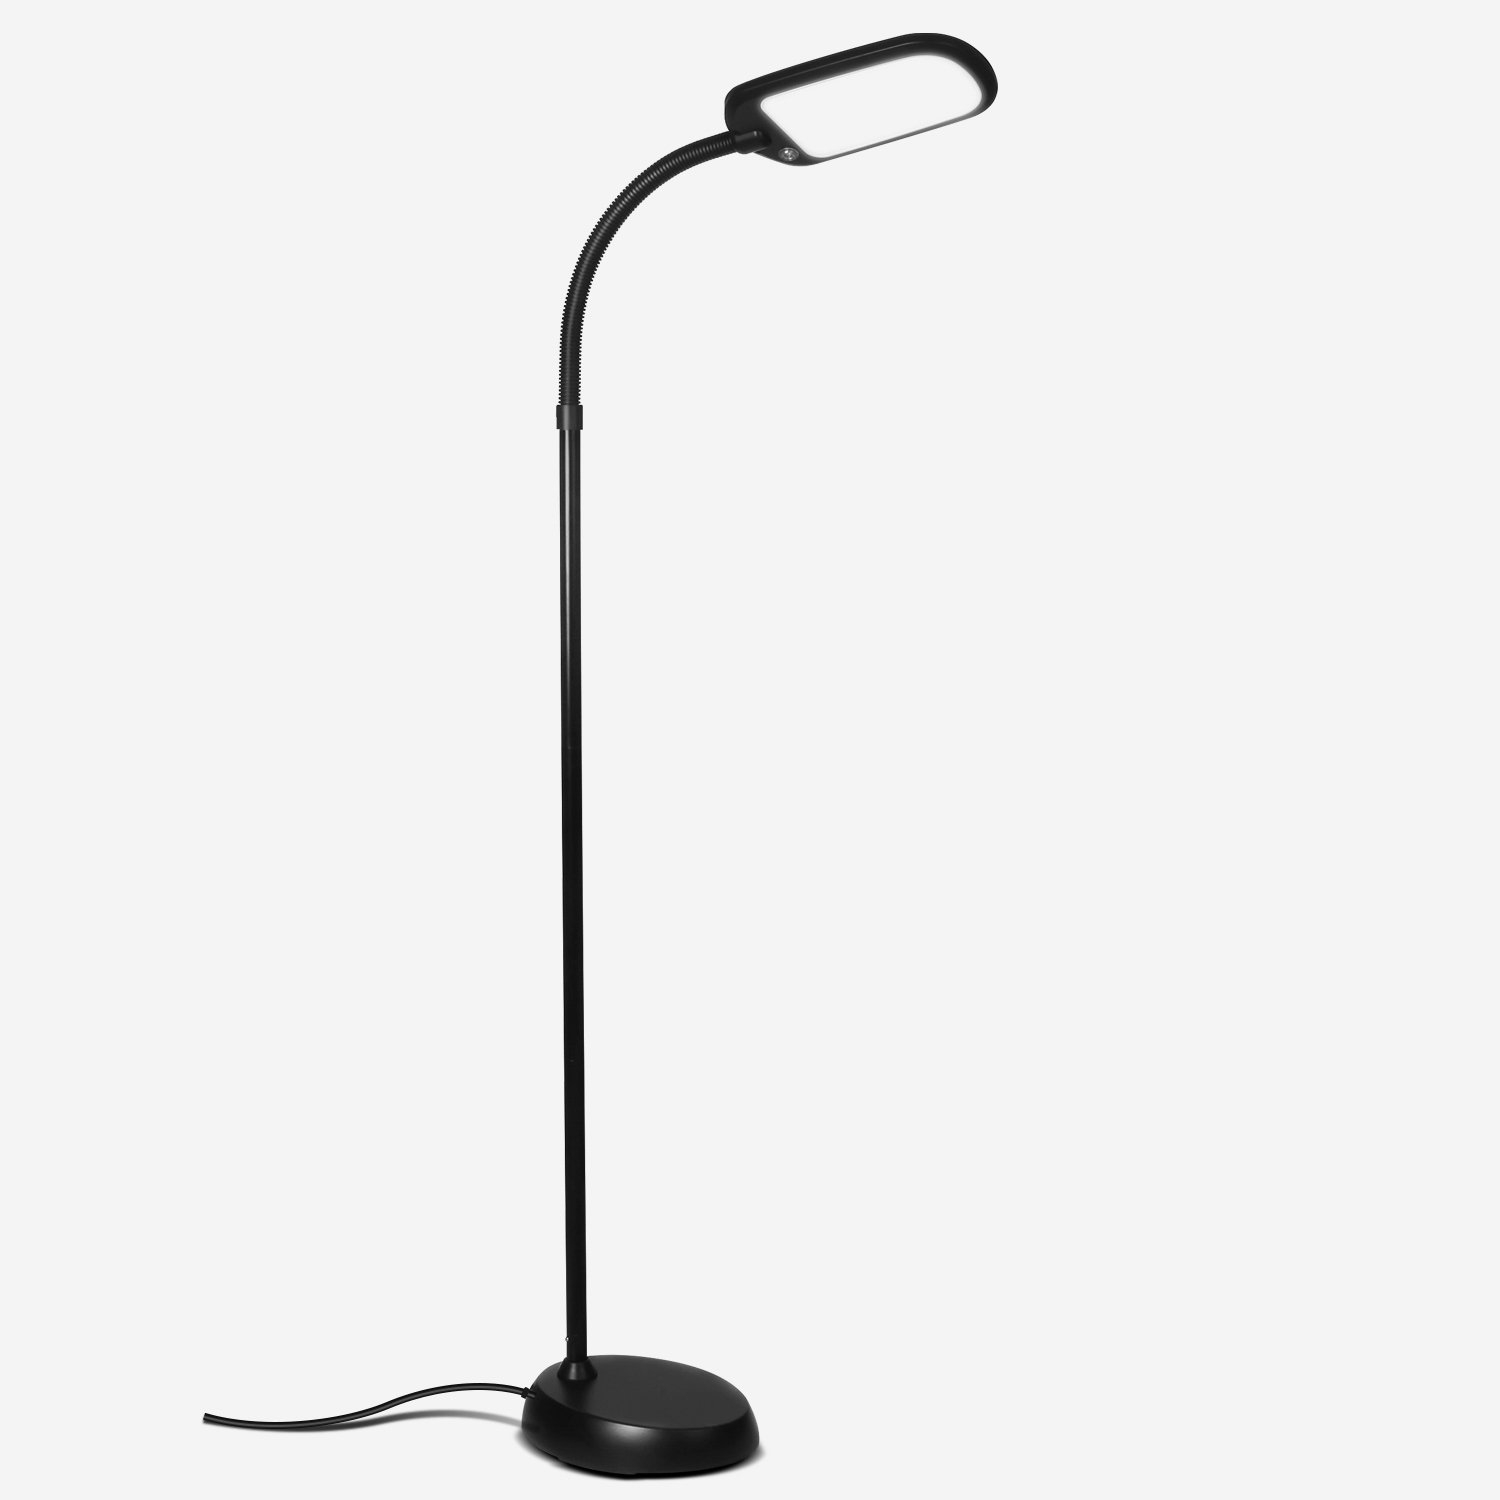 Litespan 2 Bright Led Reading Floor Lamp Free Standing Gooseneck regarding measurements 1500 X 1500